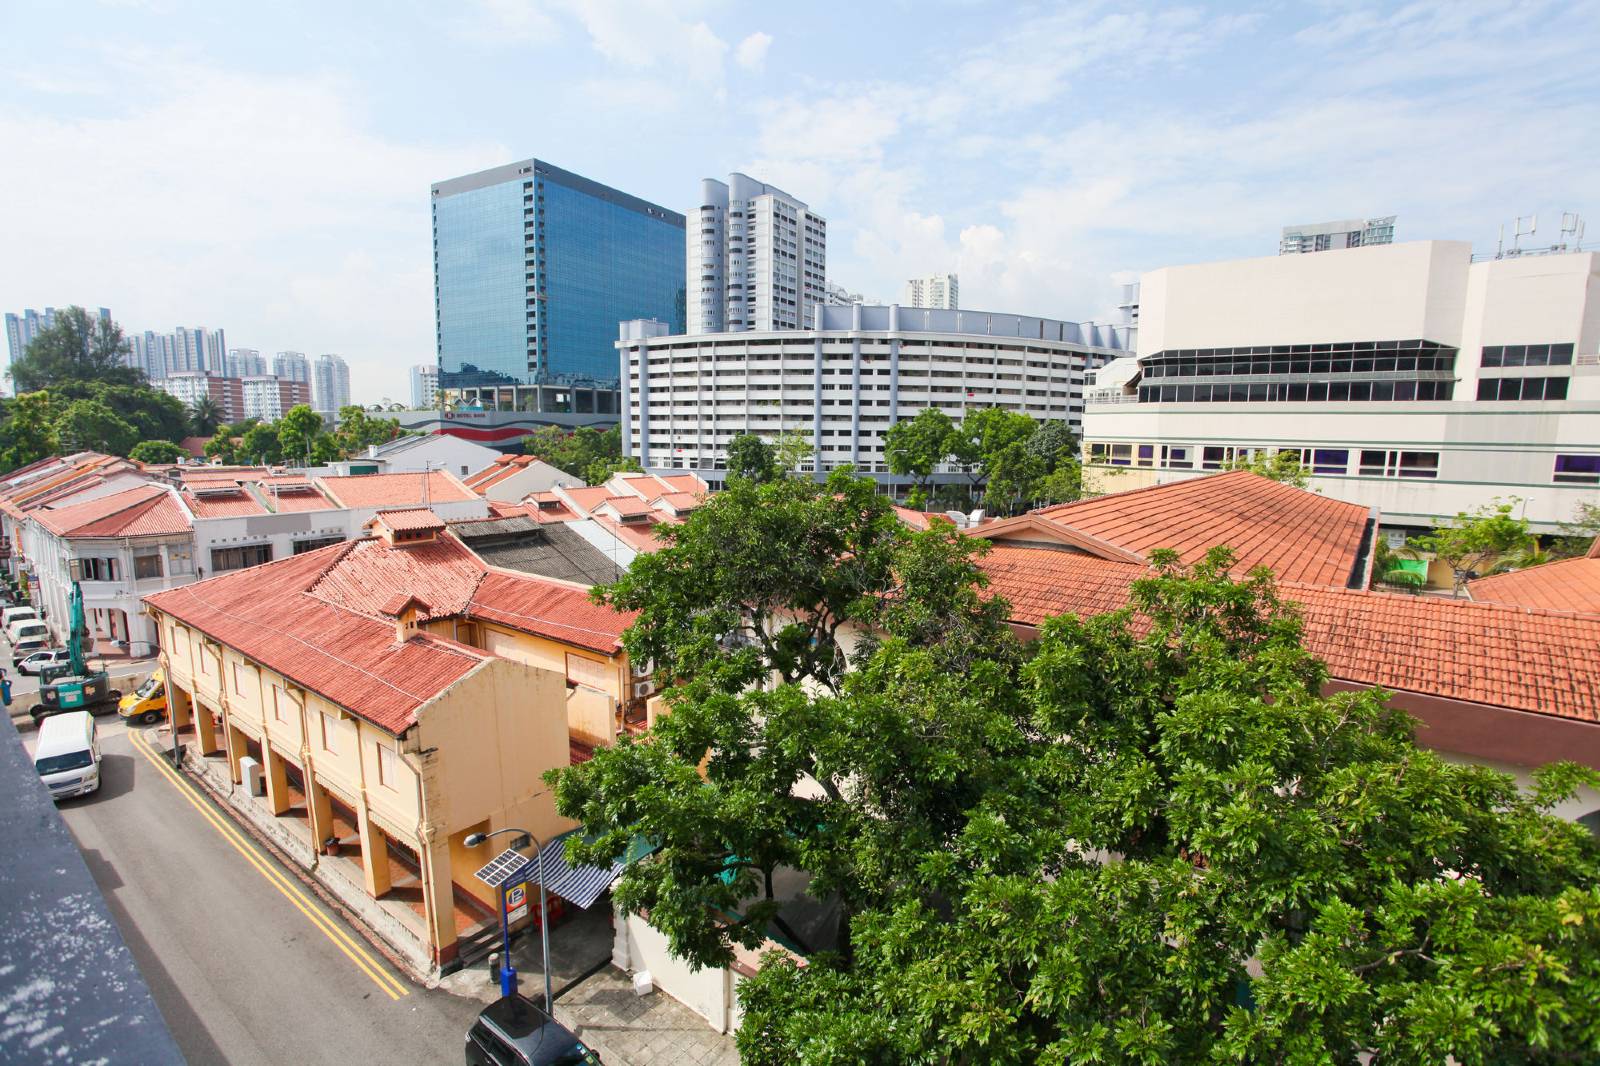 Aliwal Park Hotel Singapore